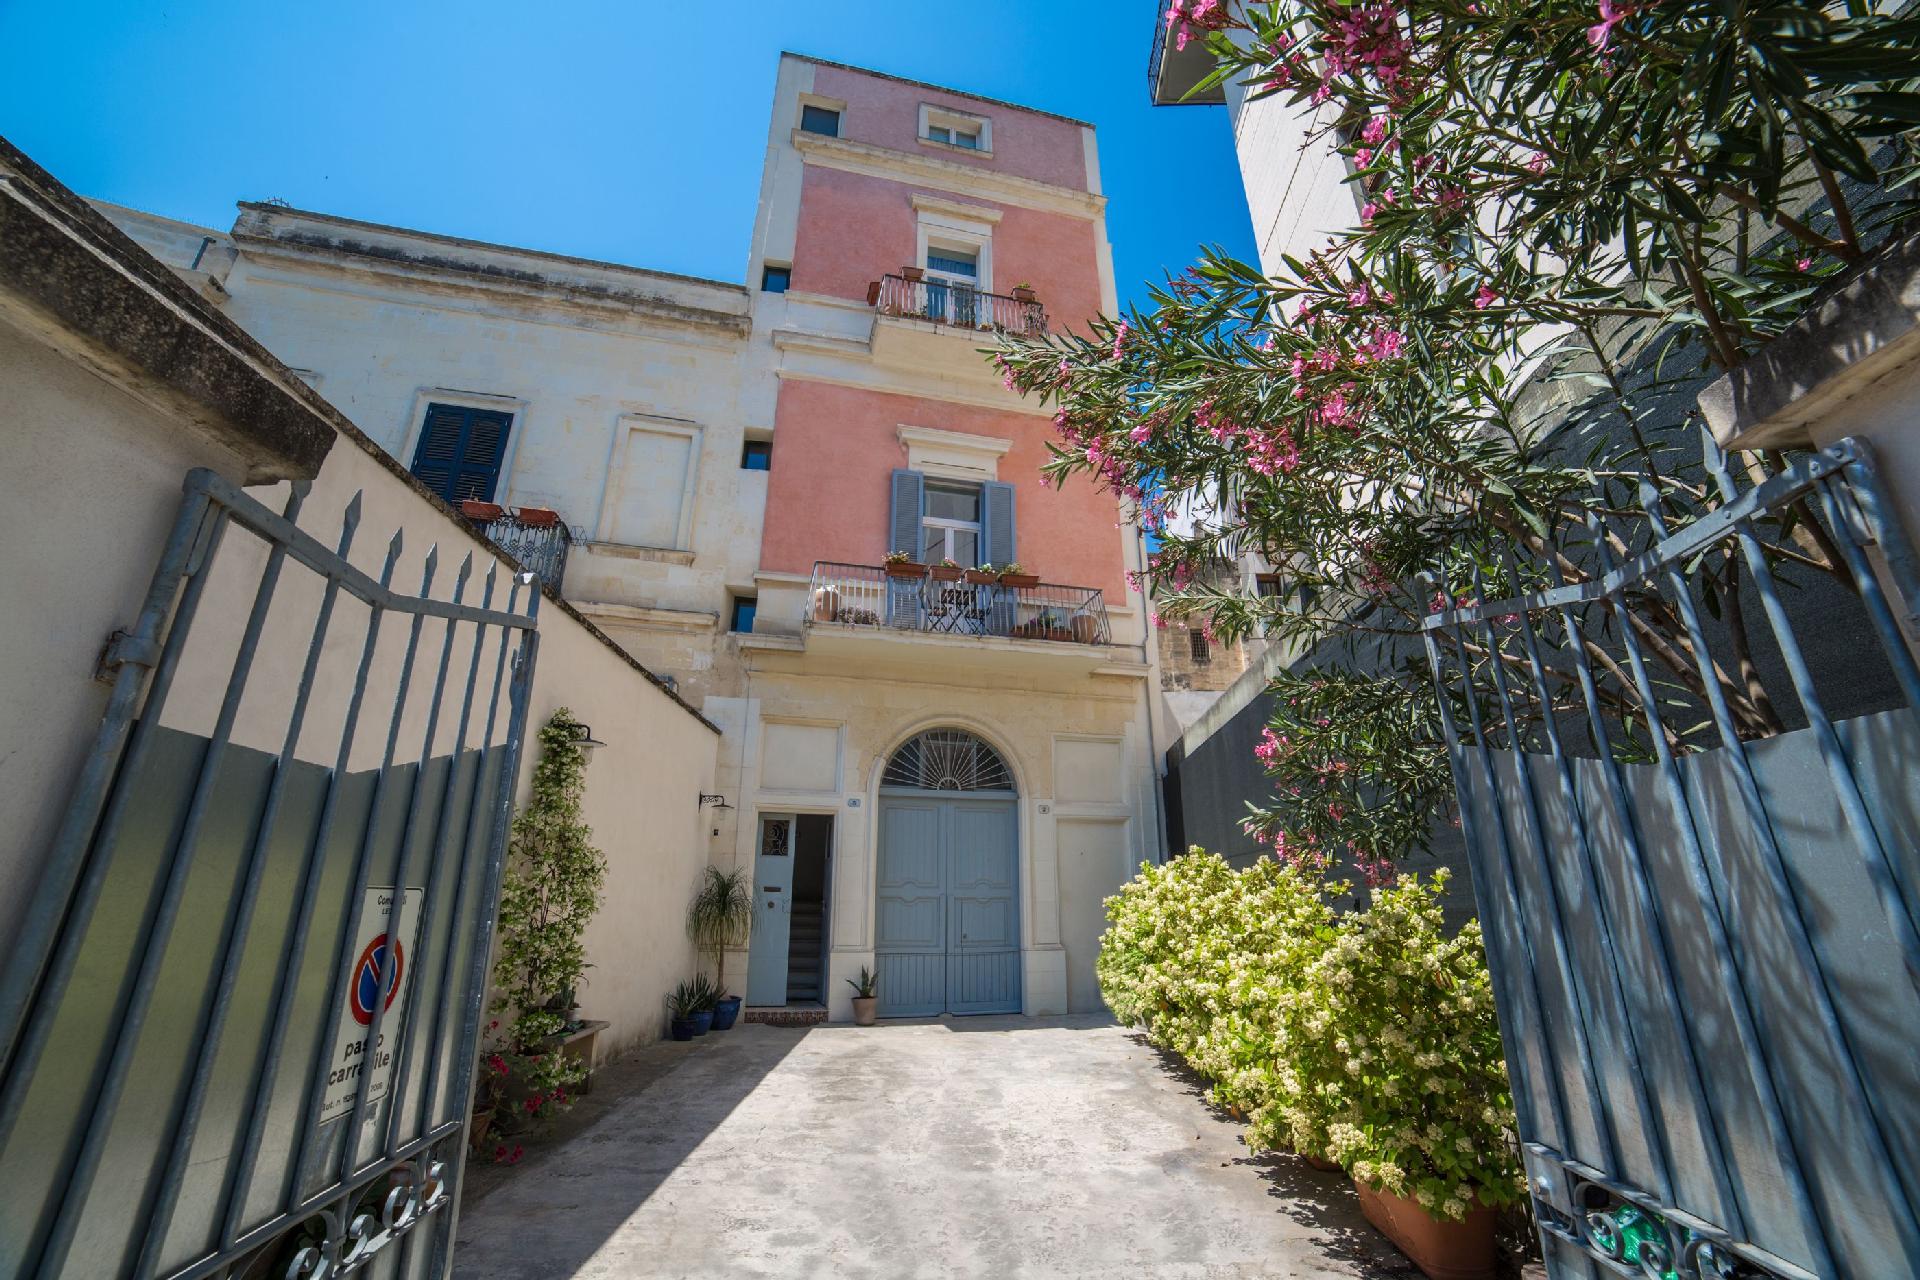 Appartement in Lecce mit Eigenem Balkon   Apulien